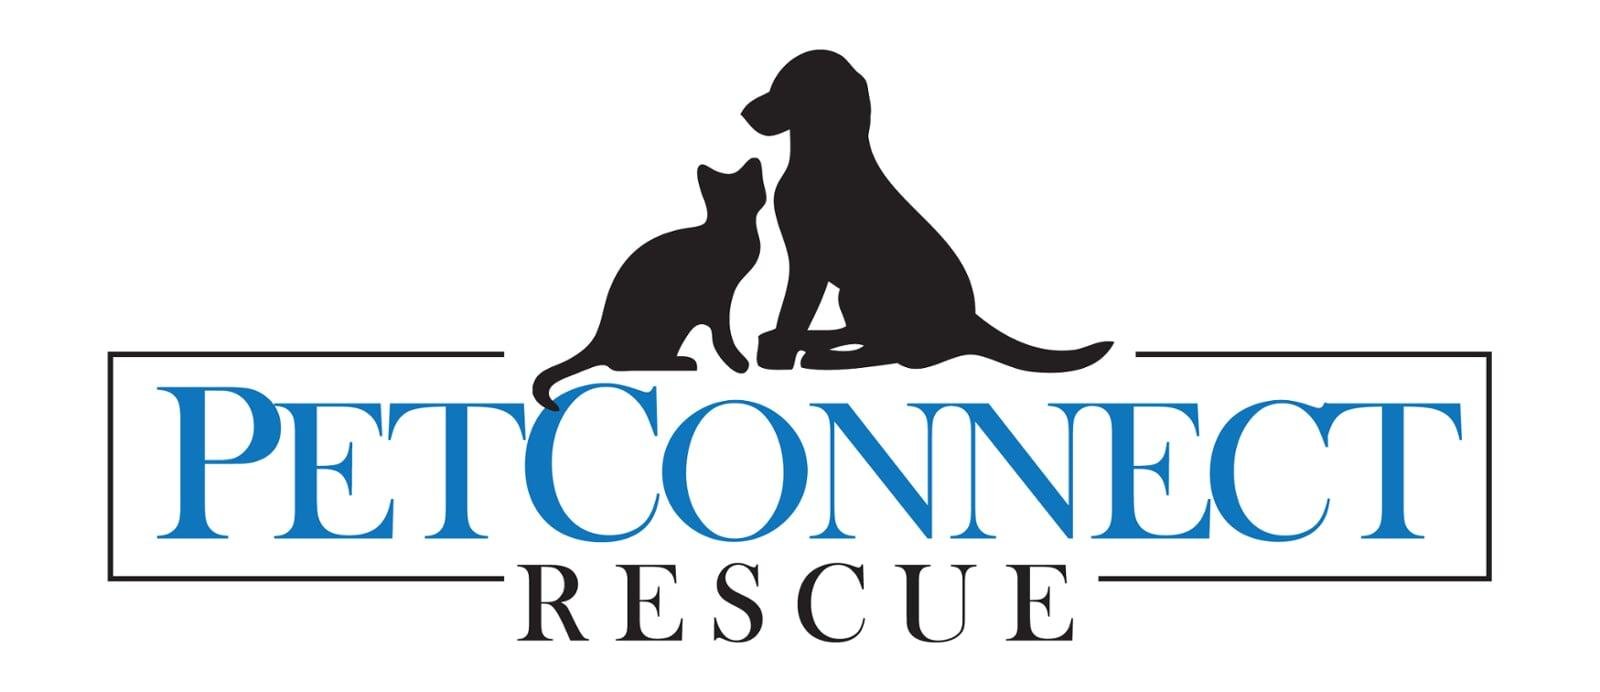 petconnect rescue